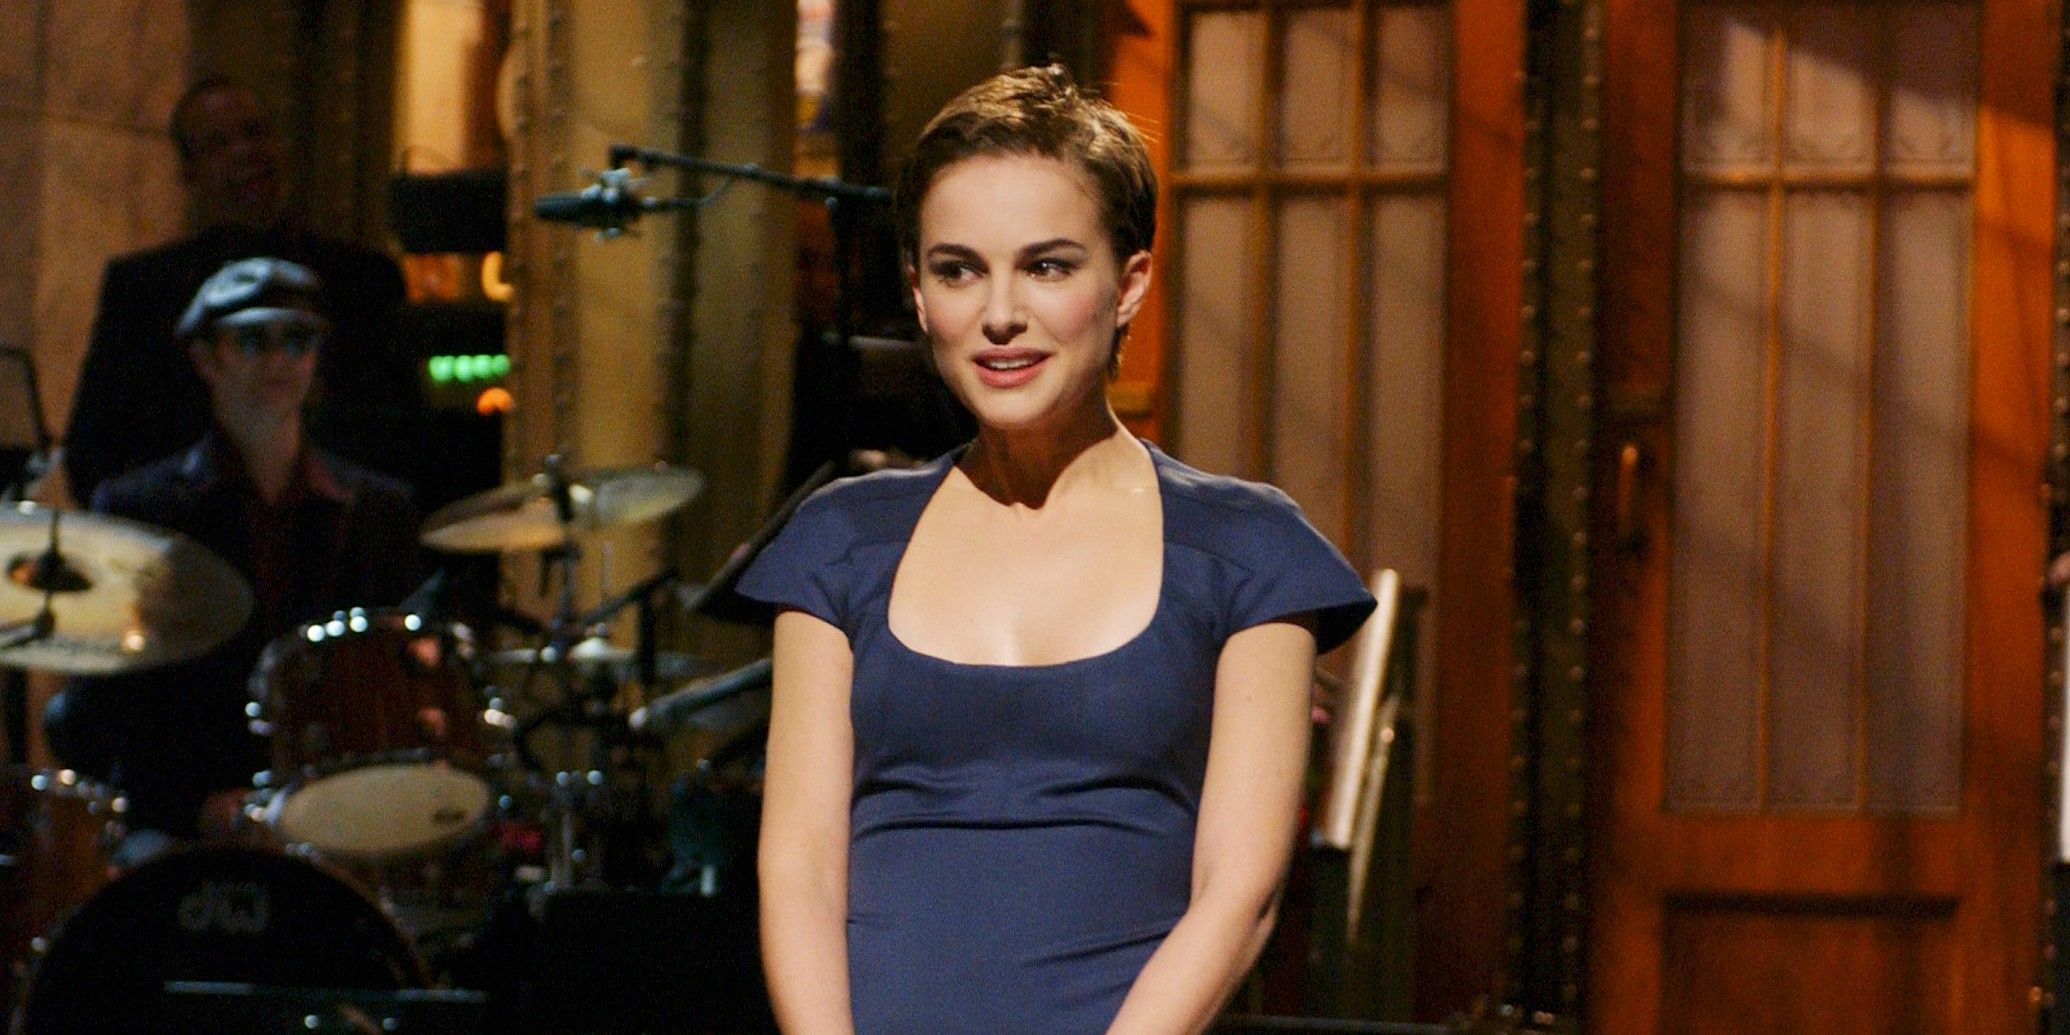 Natalie Portman on SNL